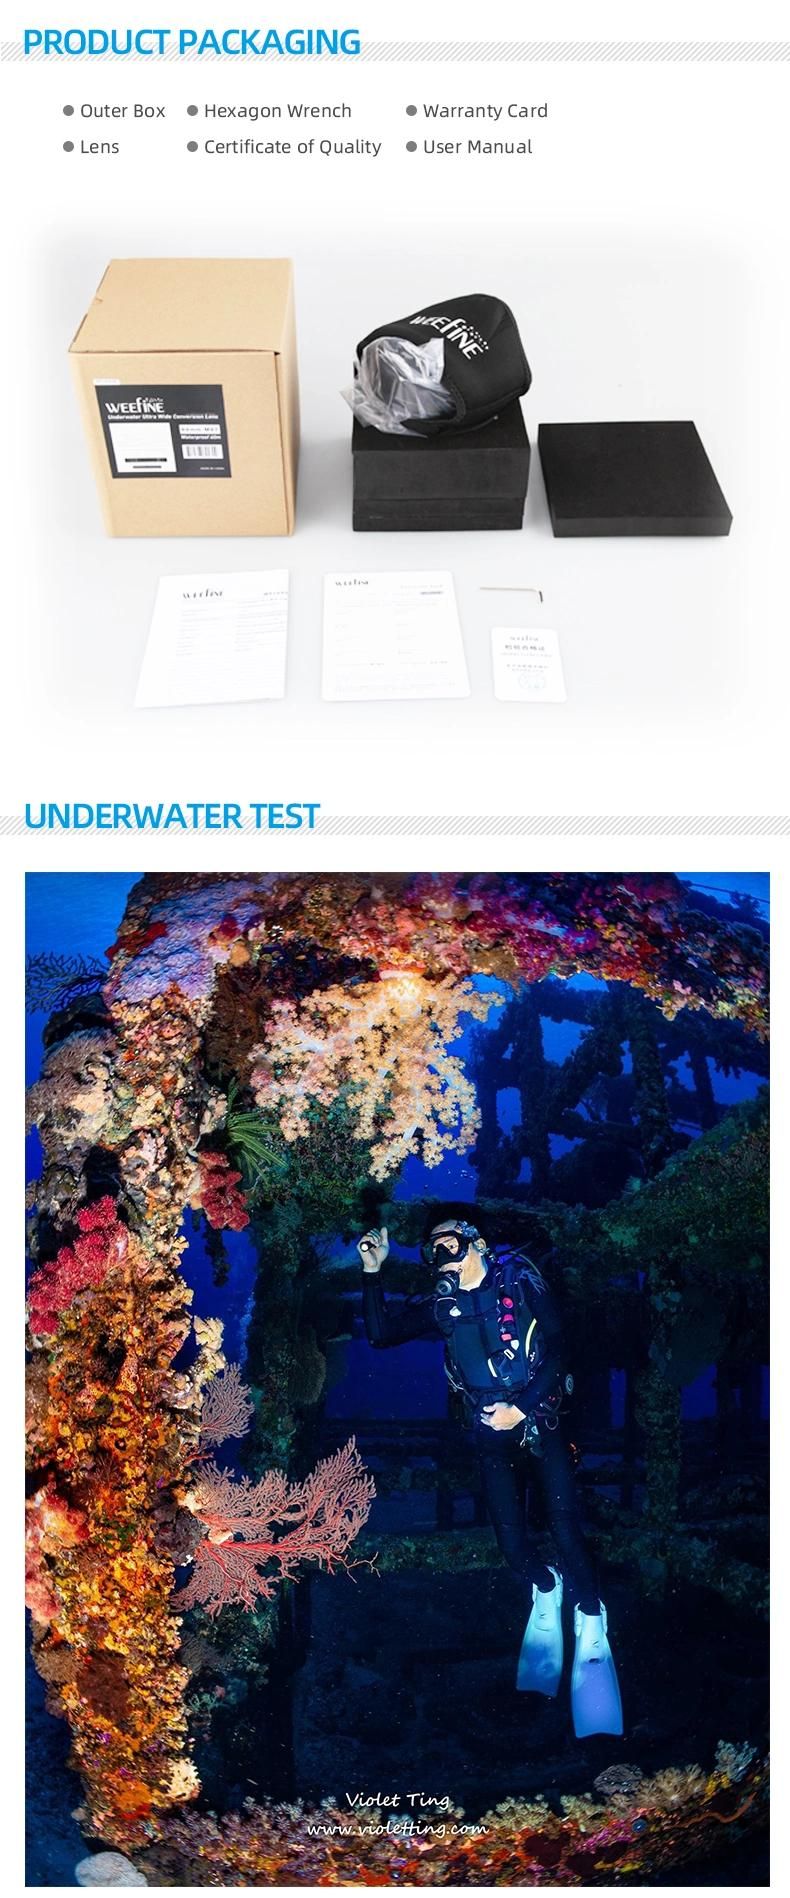 Weefine Wfl11 M52 Underwater Wide Angle Lens for Shooting Underwater Macro Photography